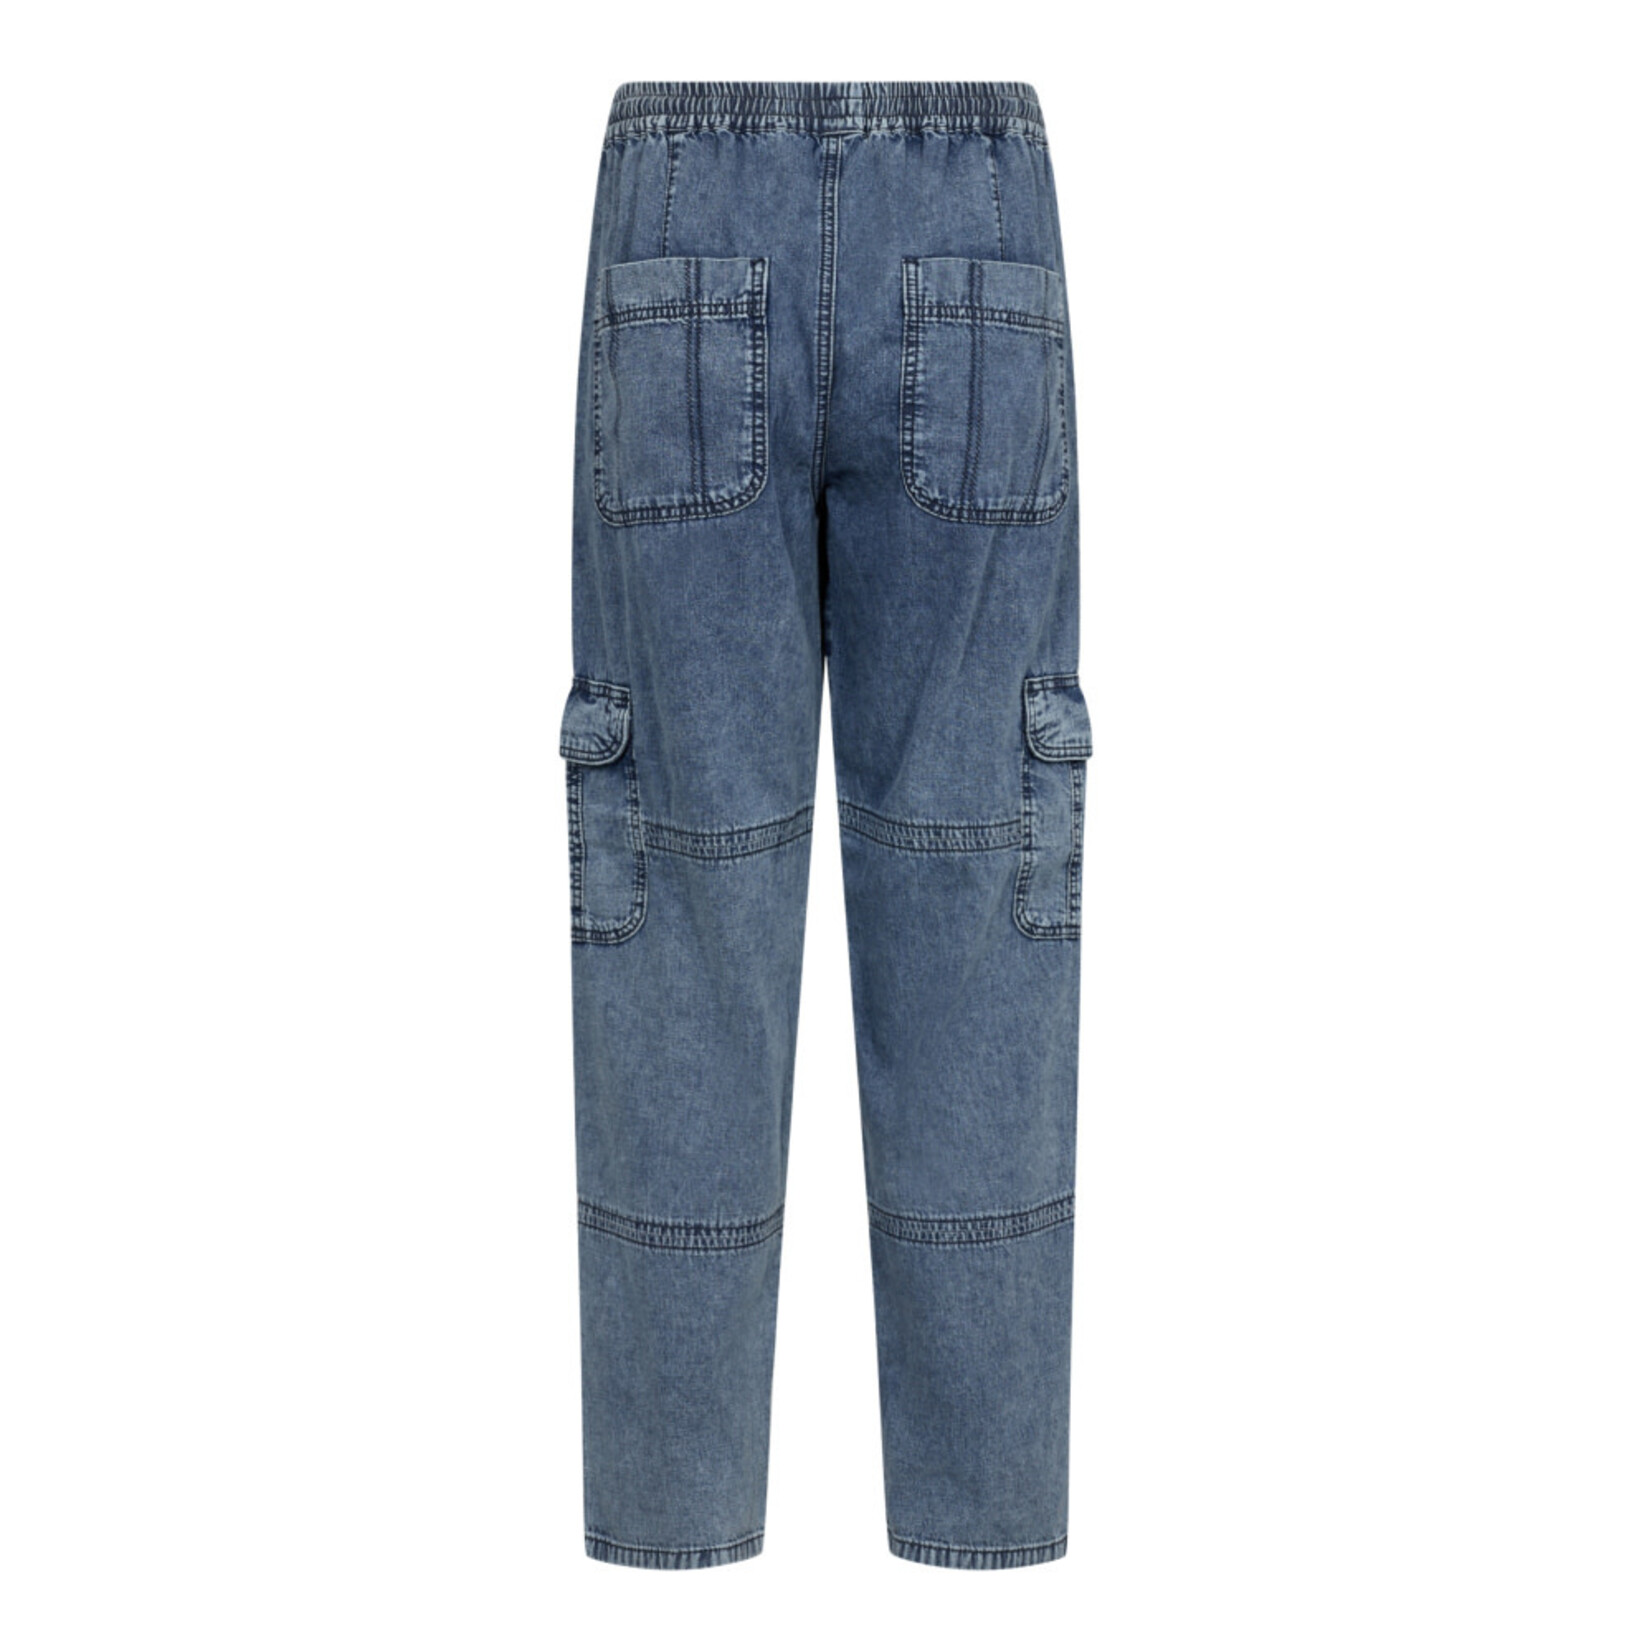 Co'couture Benson long cargo jeans